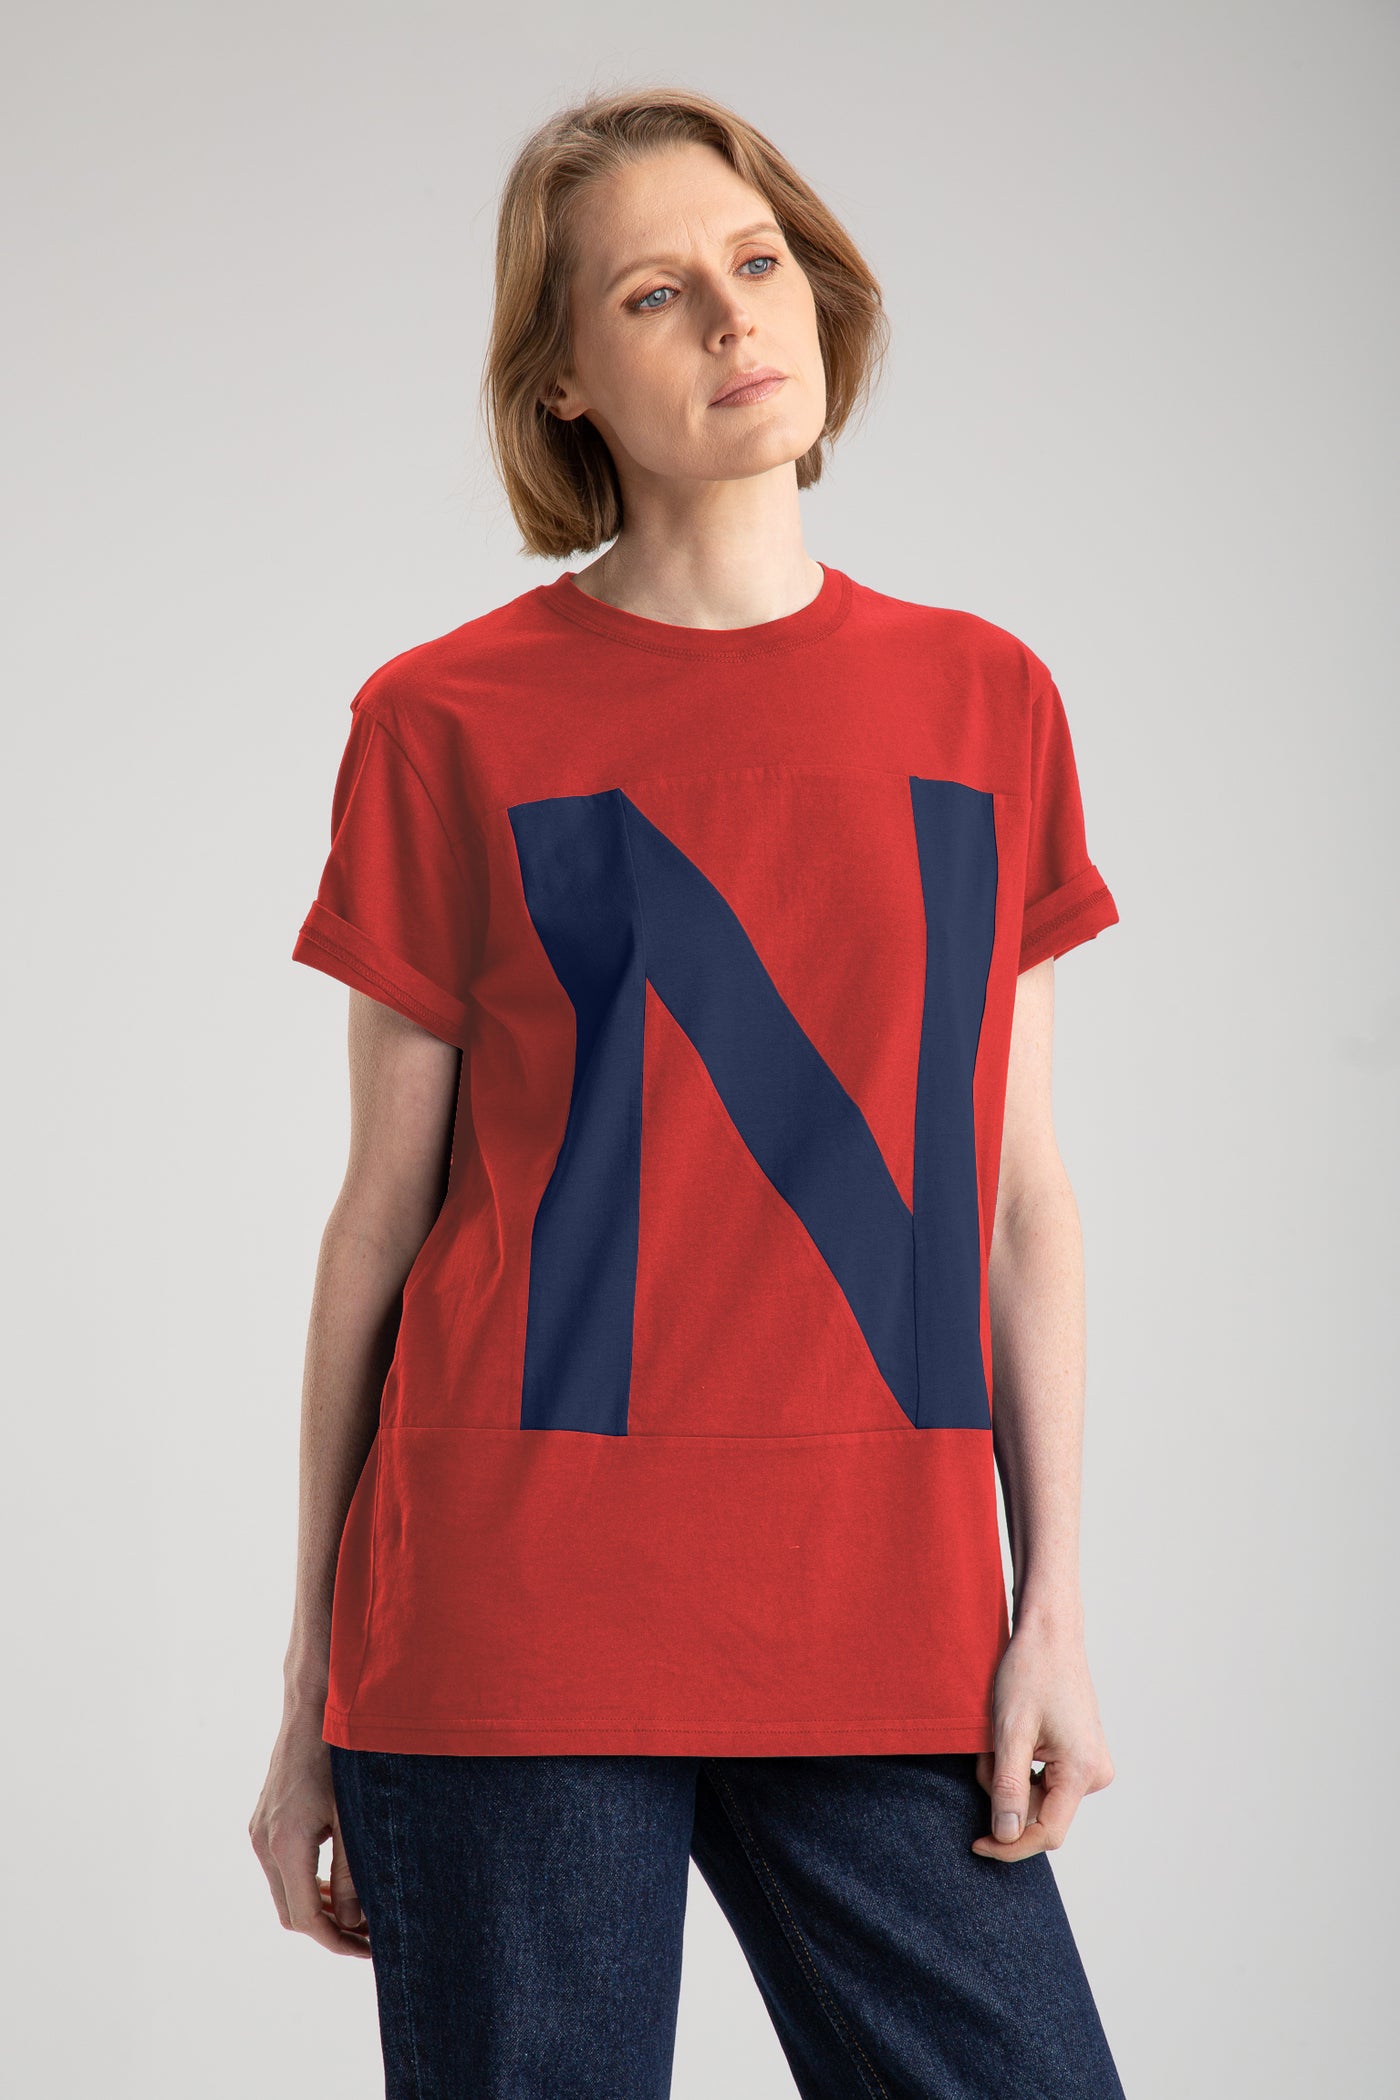 Up-shirt for women - N motif | Red, Blue